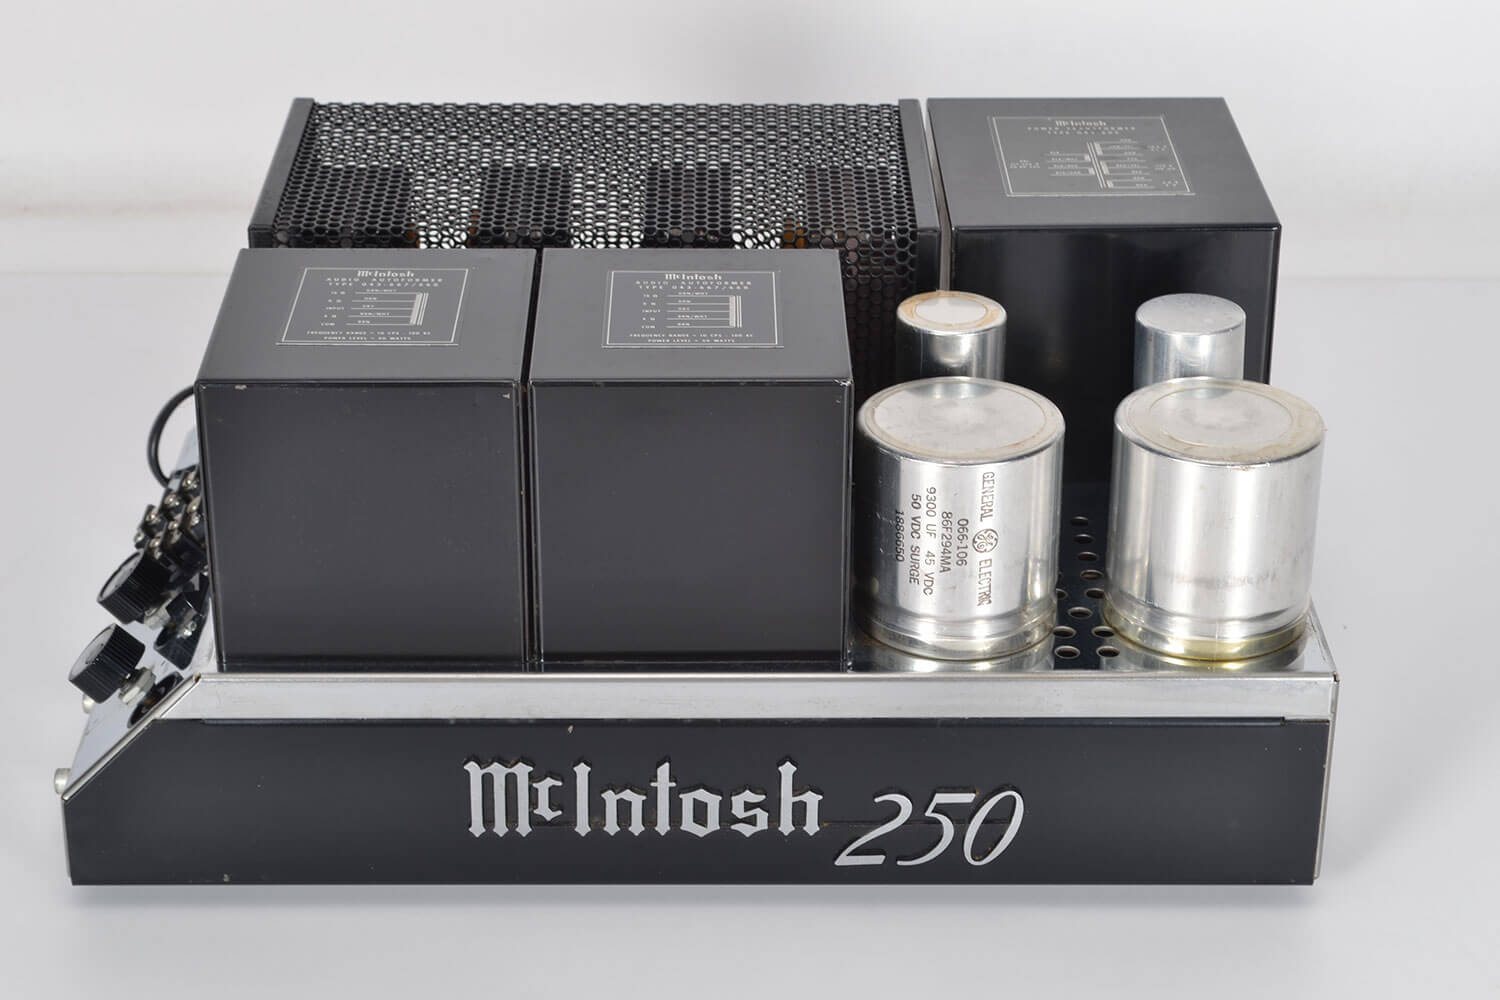 McIntosh MC 250 – High End Stereo Equipment We Buy